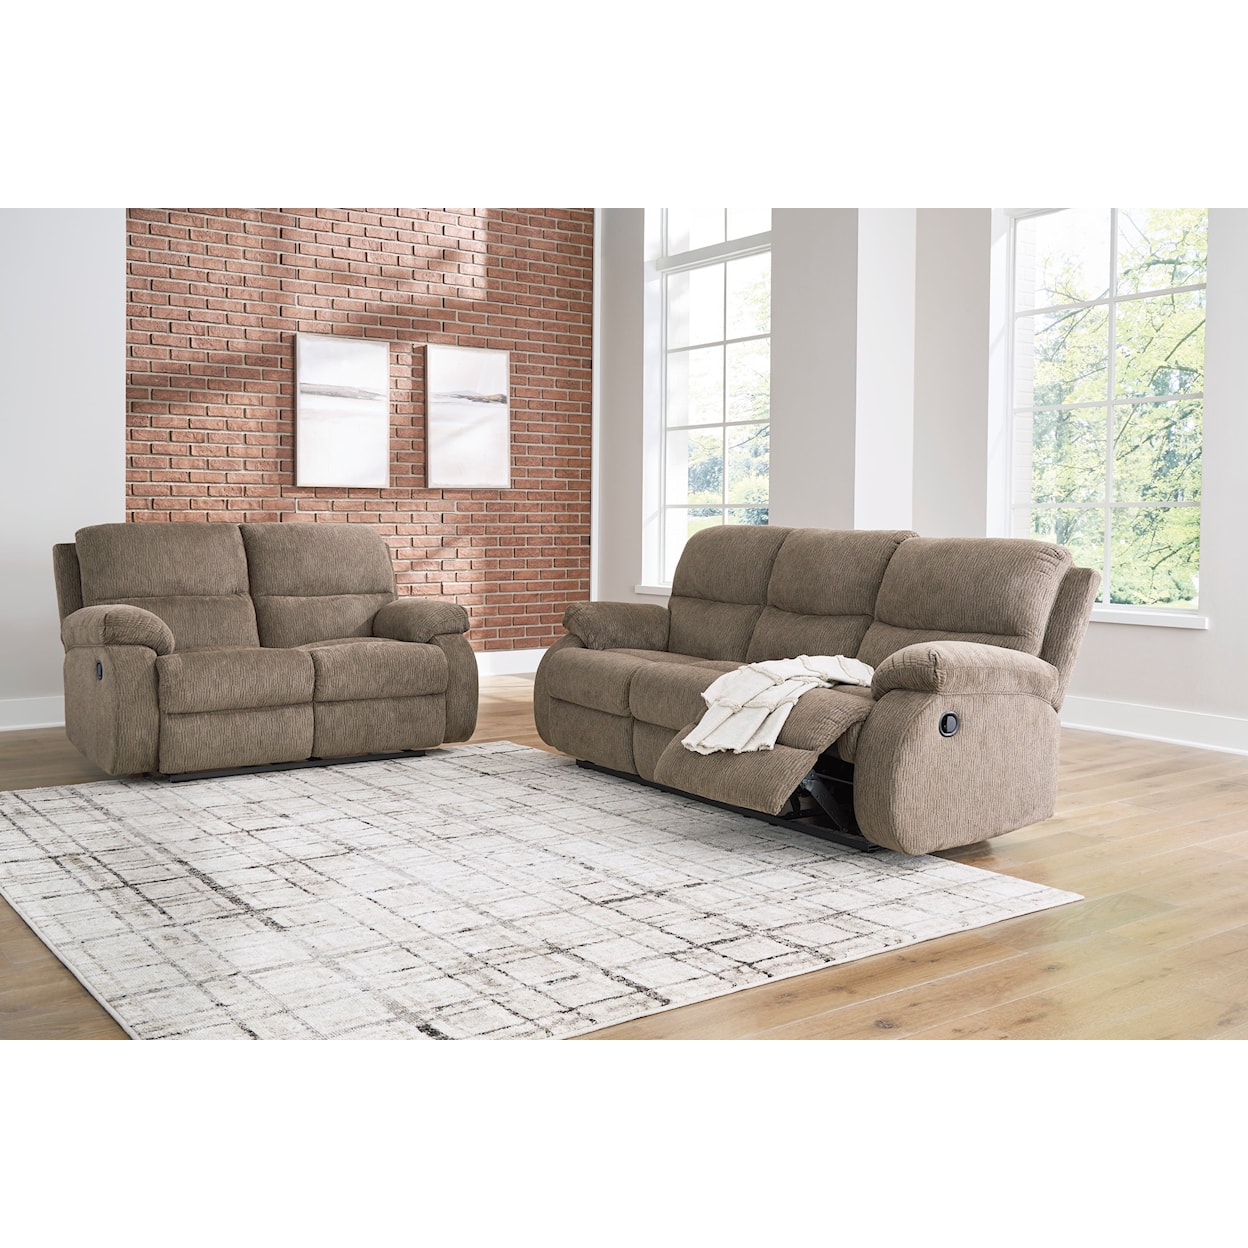 Ashley Furniture Signature Design Scranto Living Room Set